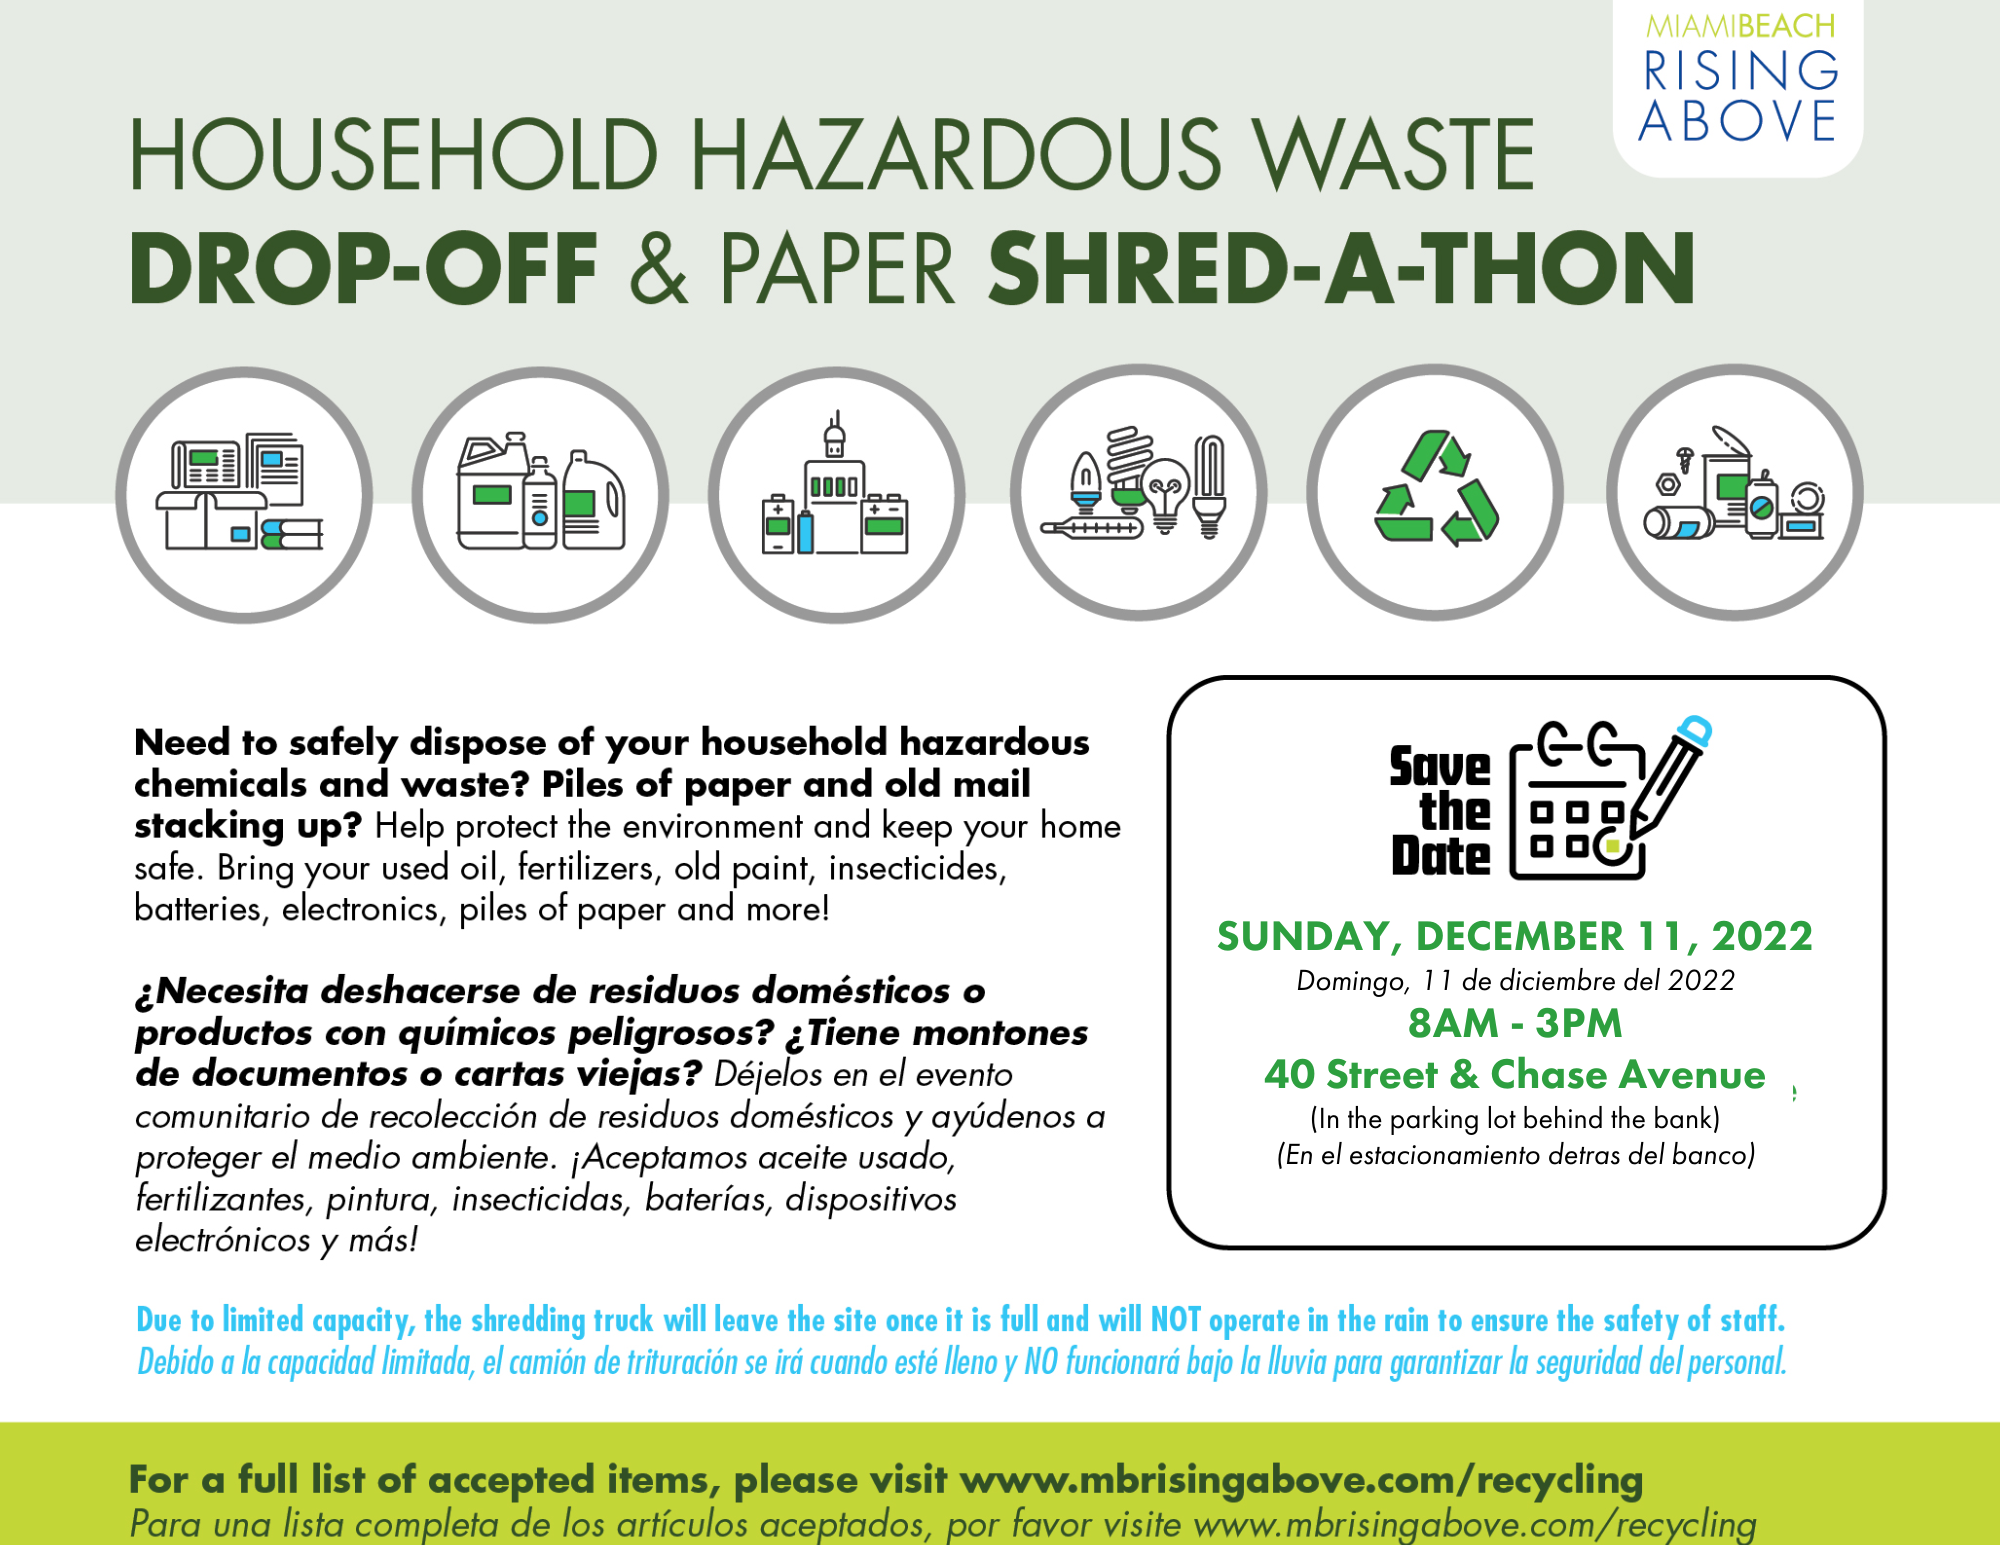 https://www.miamibeachfl.gov/wp-content/uploads/2022/10/Household-Hazardous-Waste-12.11.22.png